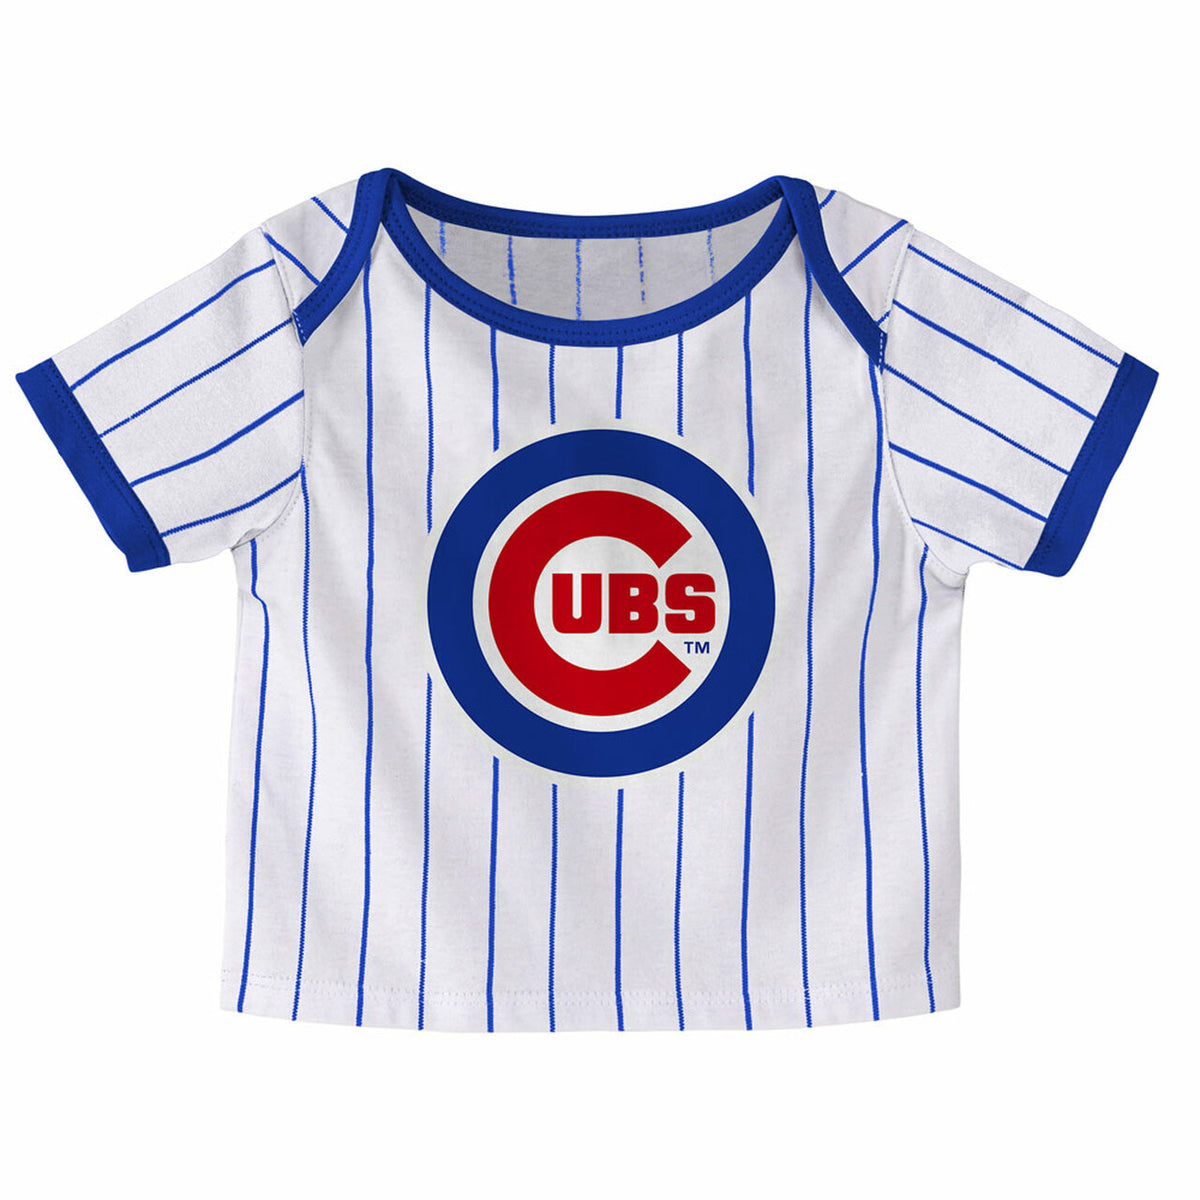 New era Team Logo Chicago Cubs Short Sleeve T-Shirt White